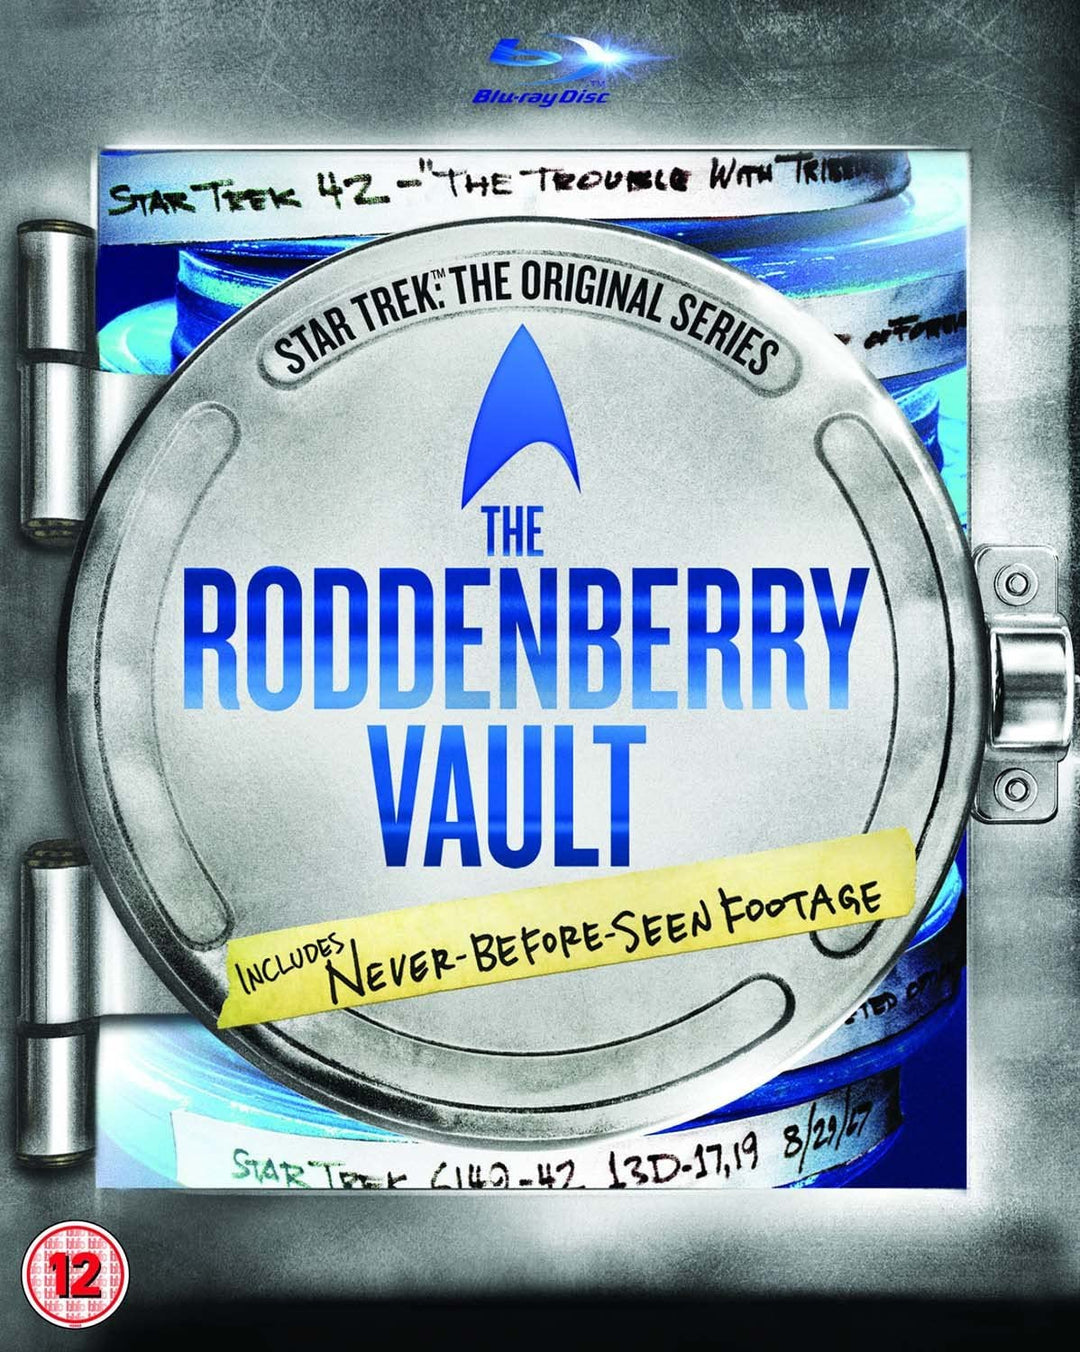 Star Trek: The Original Series - The Roddenberry Vault [Blu-ray] [2016] [Région